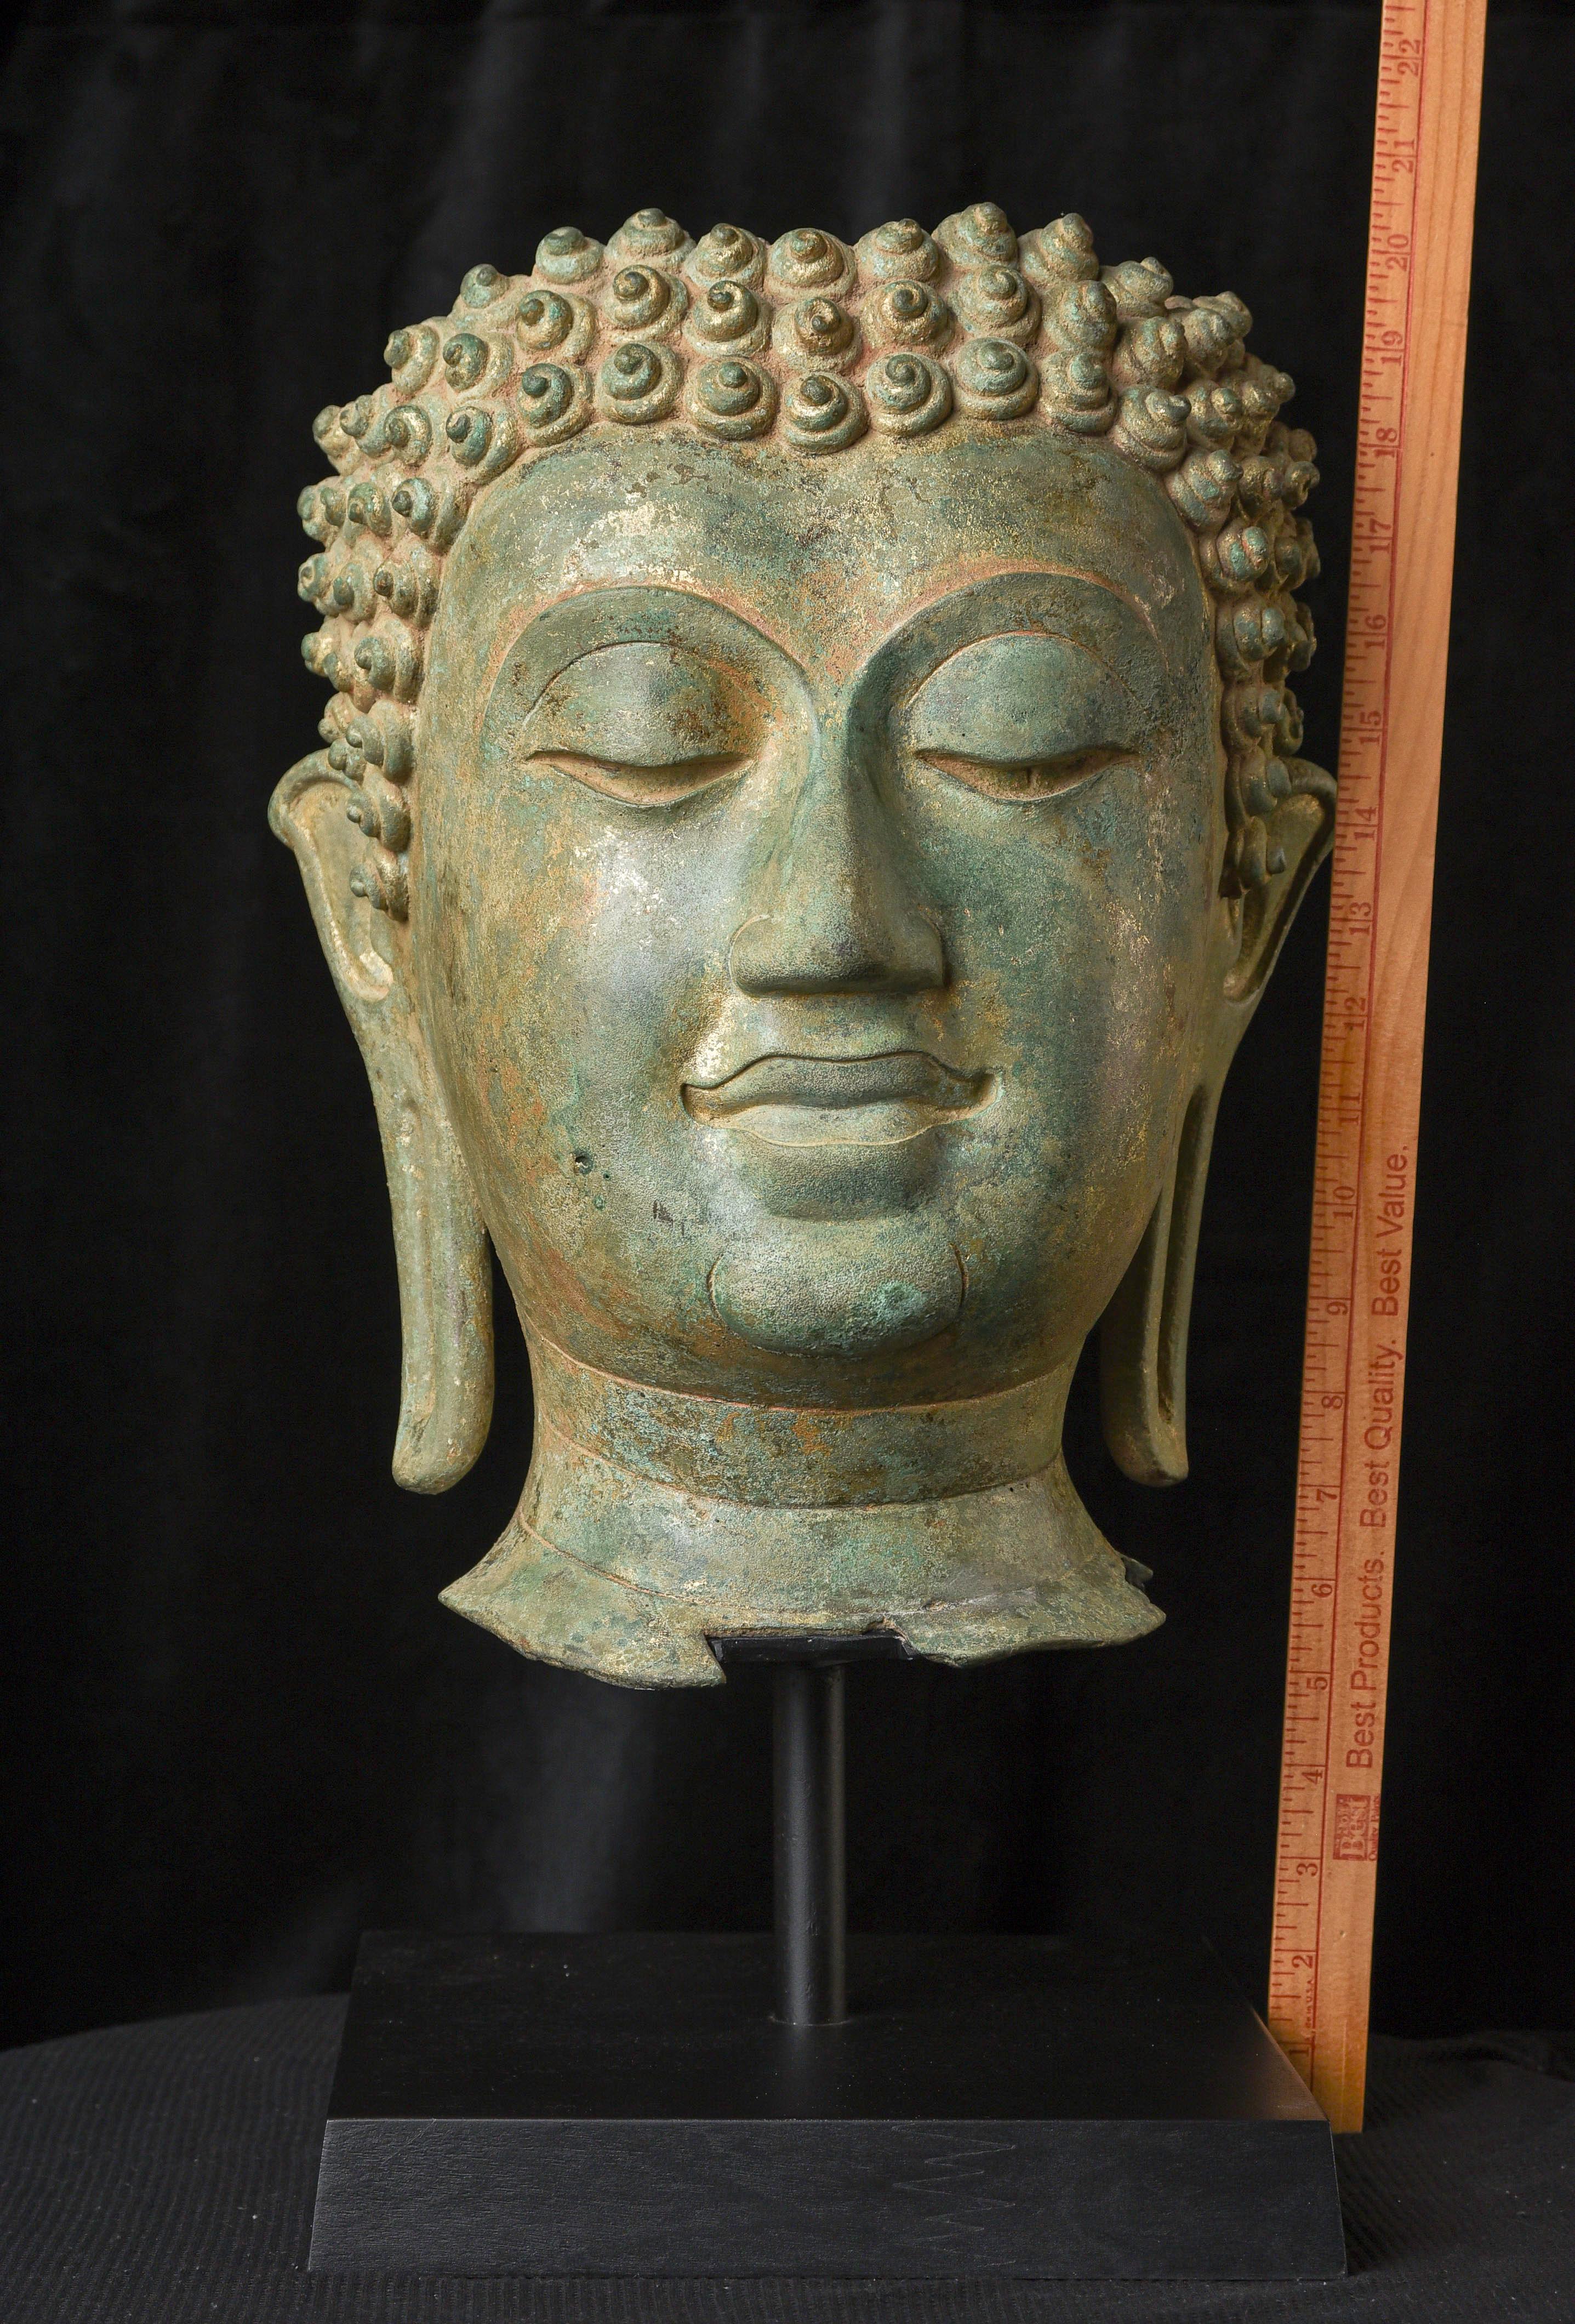 sukhothai buddha